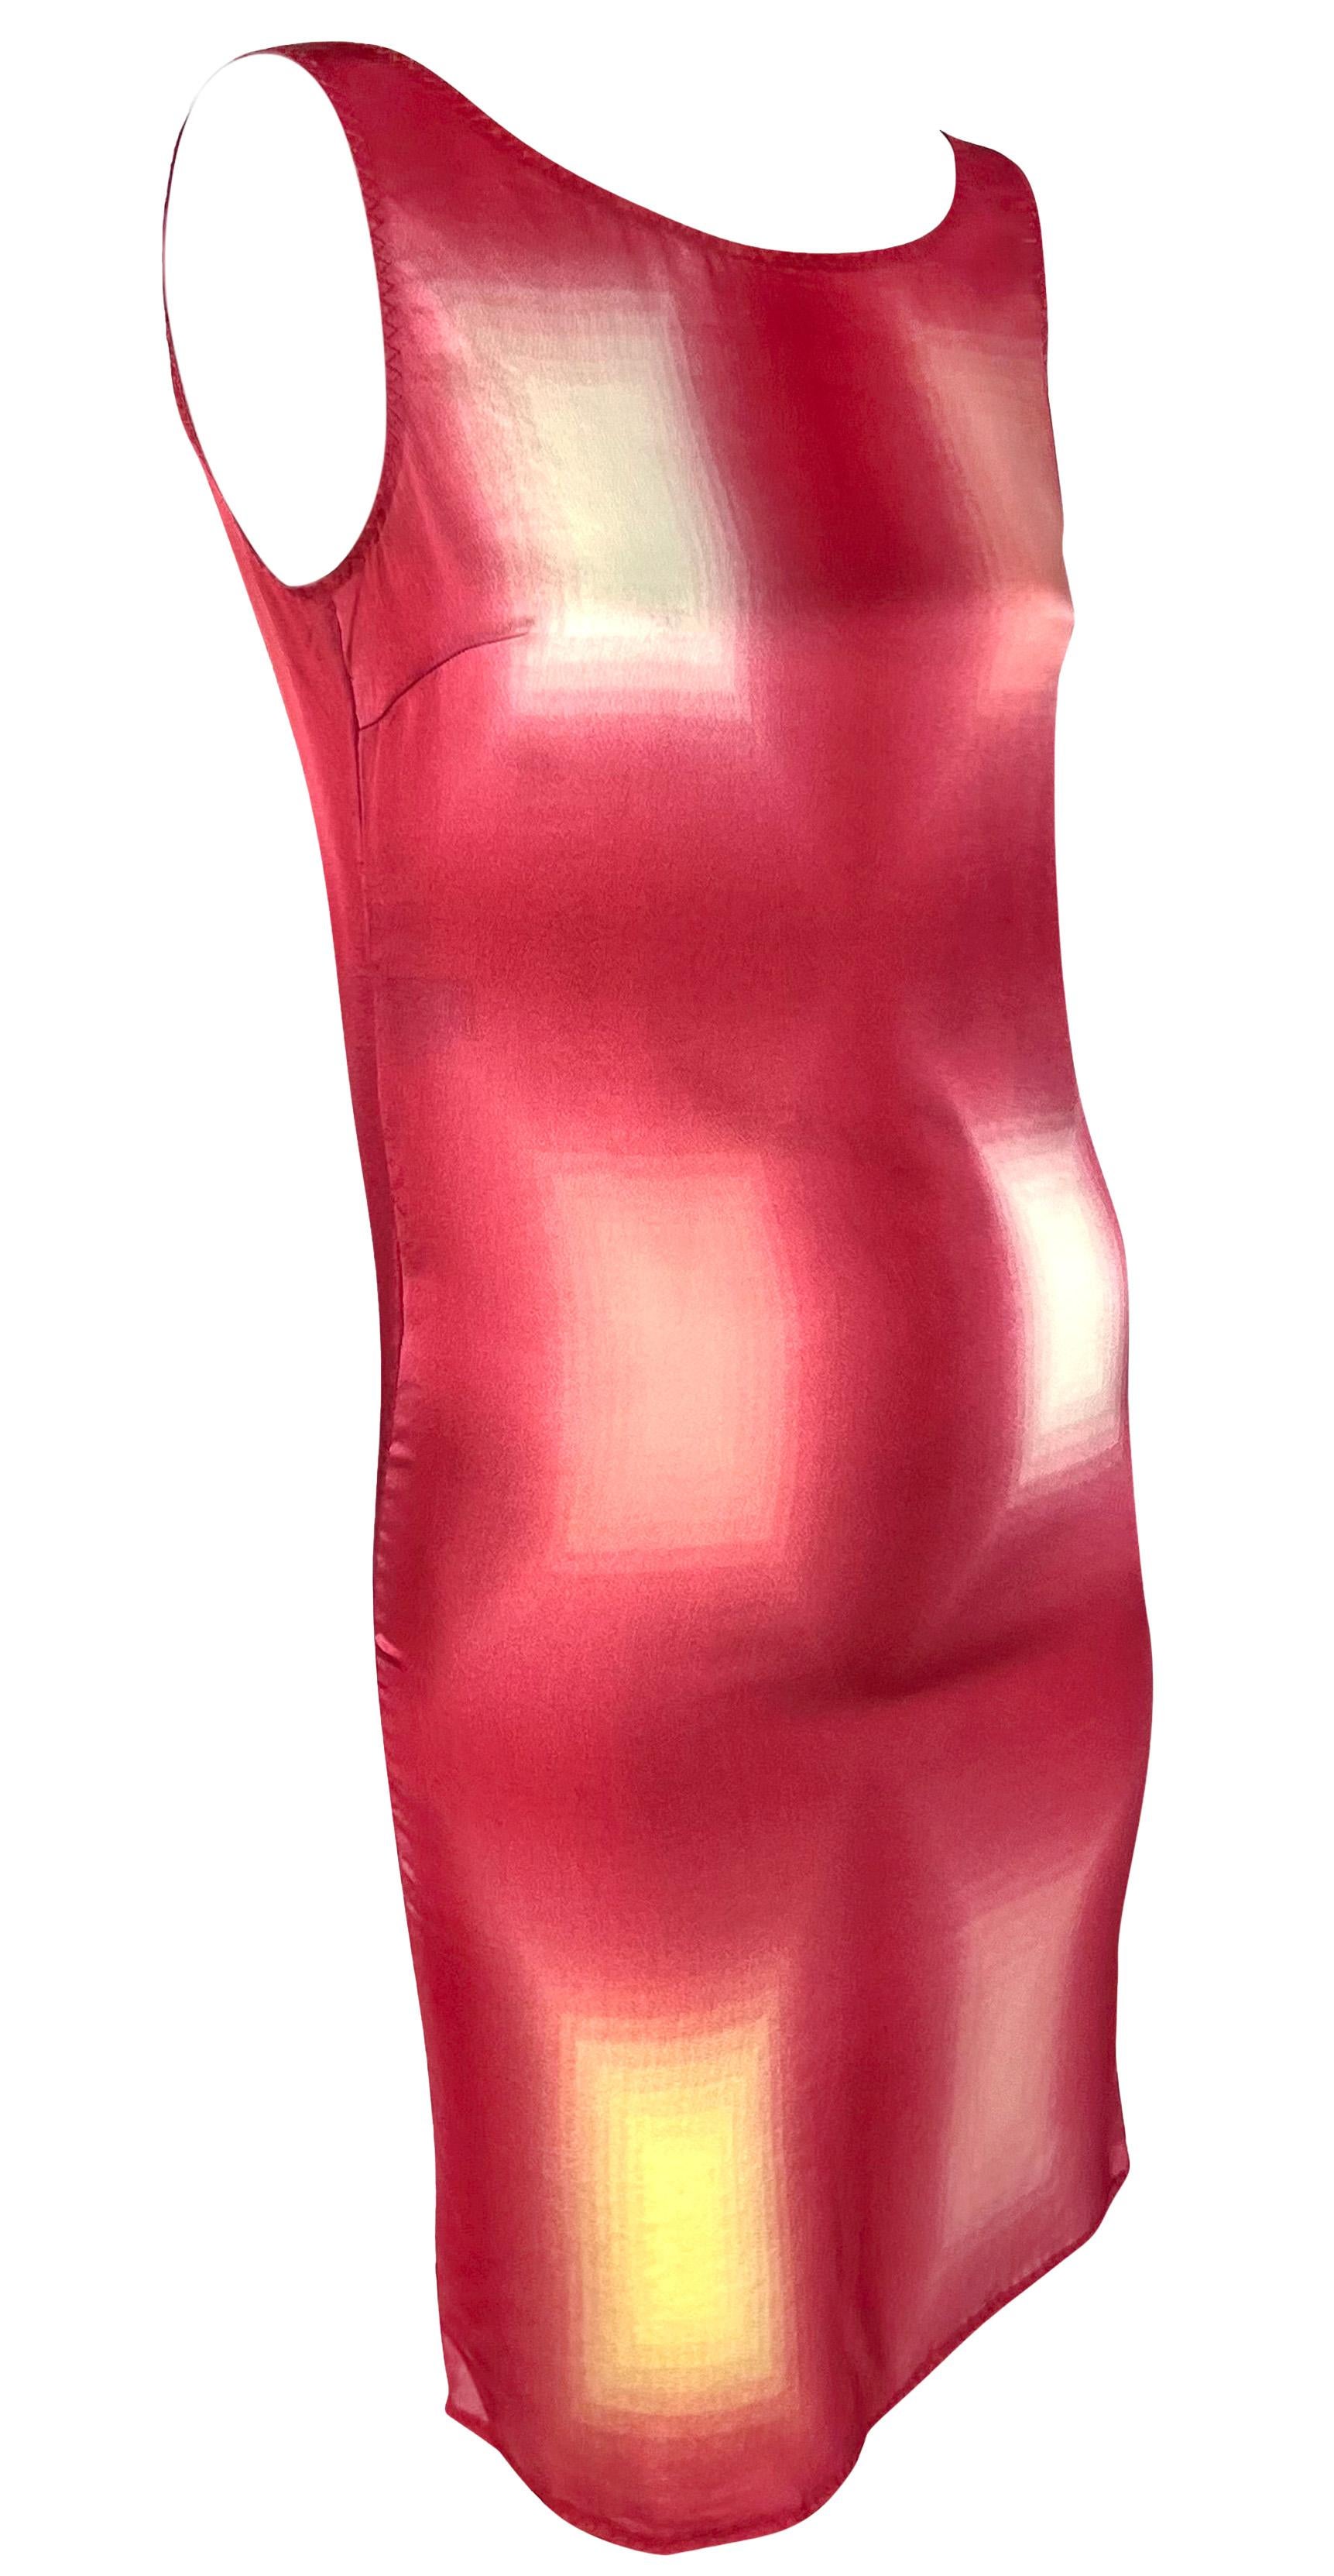 S/S 1998 Prada Red Geometric Ombré Sheer Sleeveless Dress For Sale 4